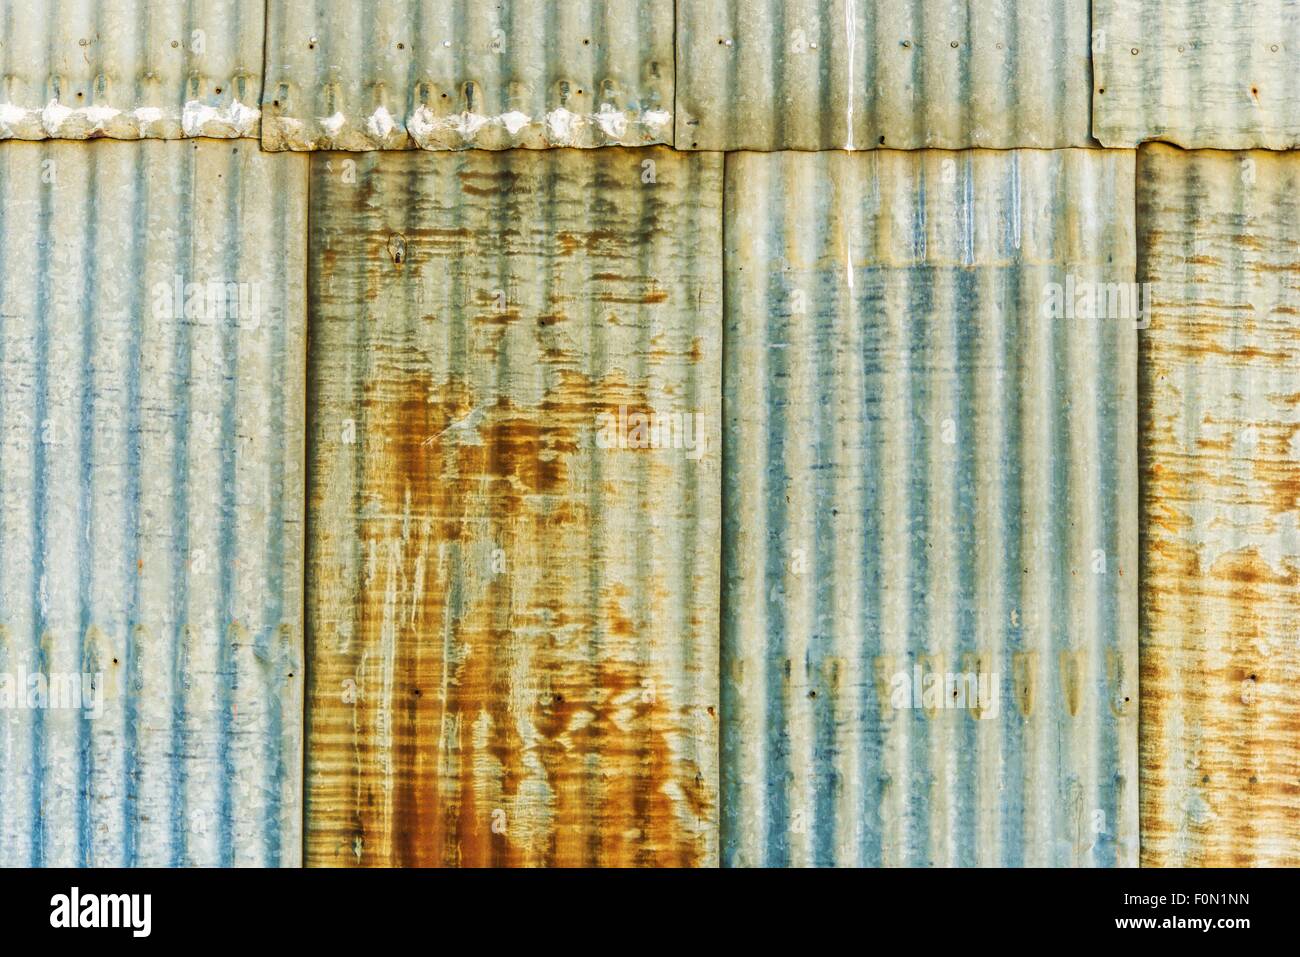 Aged Rusty Corrugated Metal Panels Photo Background. Stock Photo